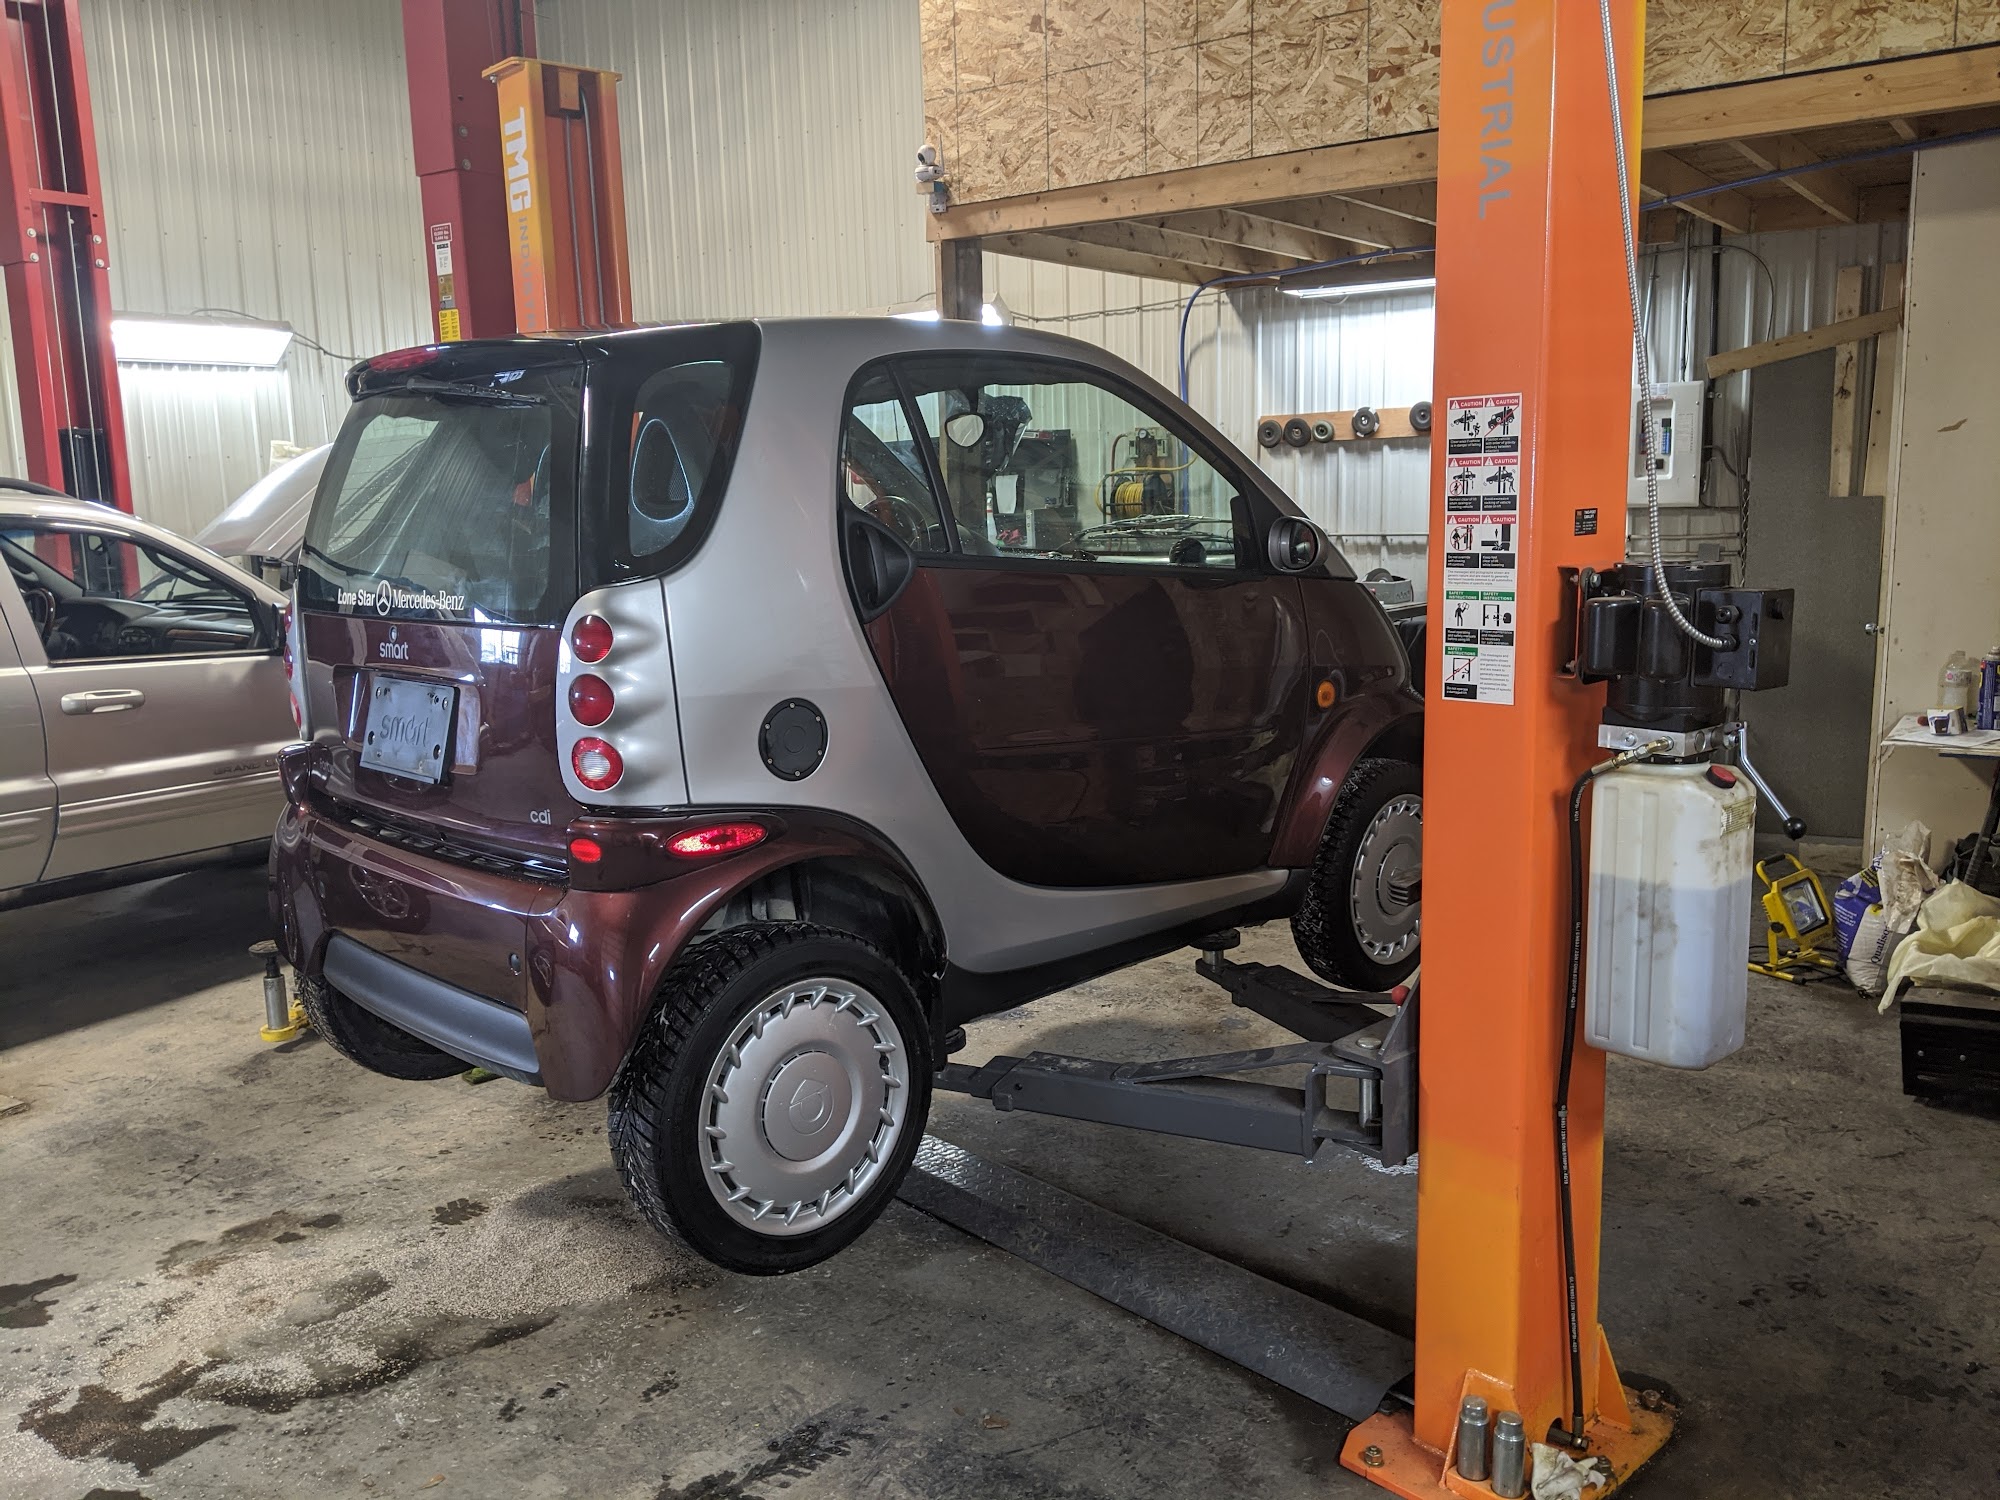 DIY Auto Repair Shop 530 Cargill Rd, Winkler Manitoba R6W 0K4